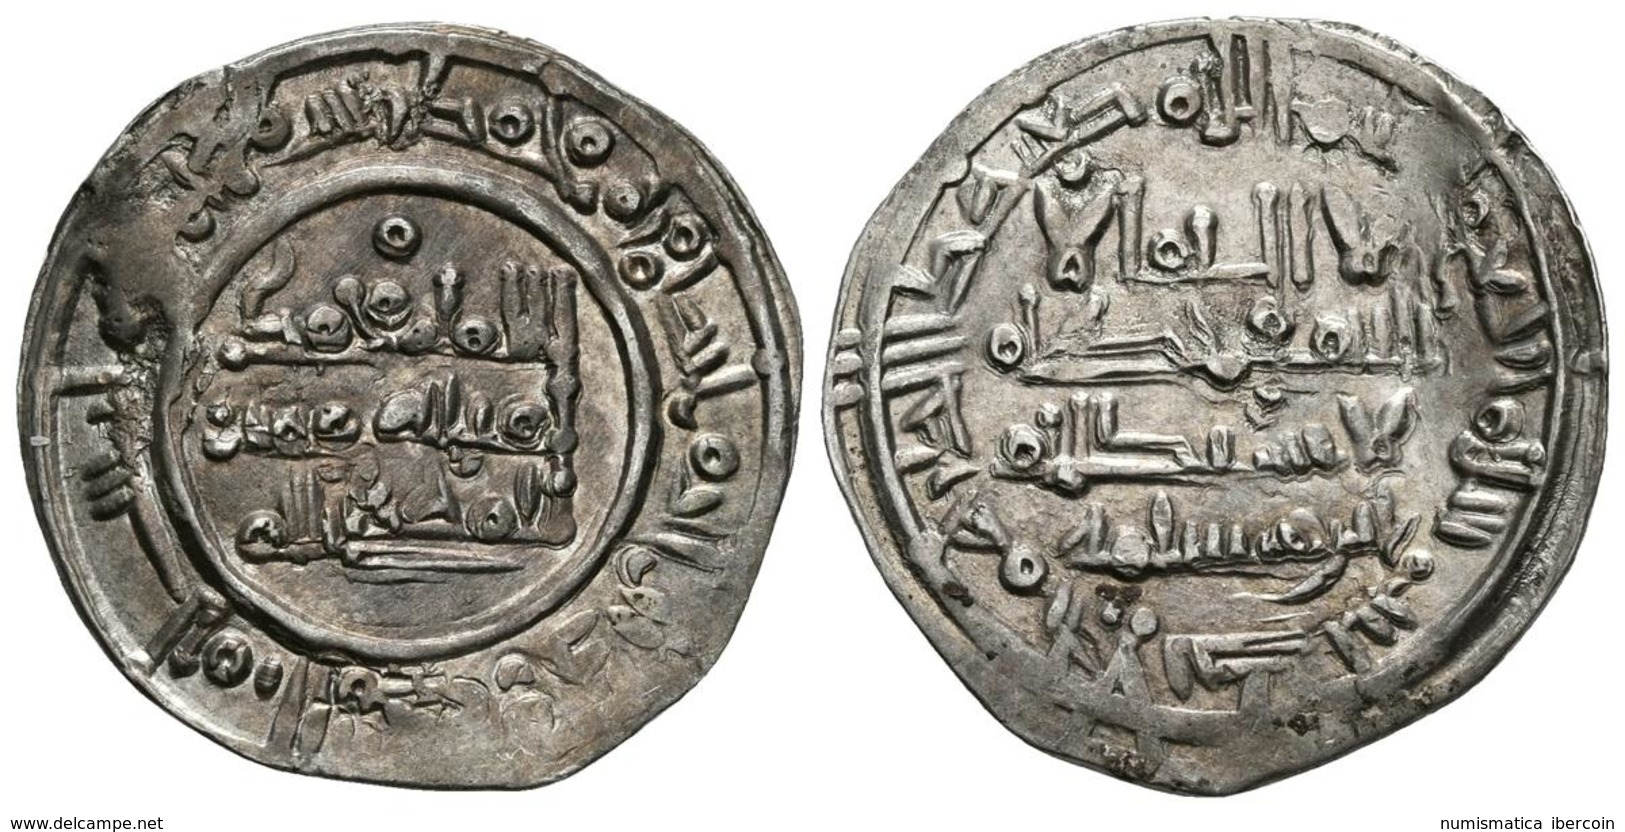 CALIFATO DE CORDOBA. Muhammad II. Dirham. 400H. Al-Andalus. V-688; Prieto 4. Ar. 3,68g. Bonita Pátina. EBC-. - Islamiques